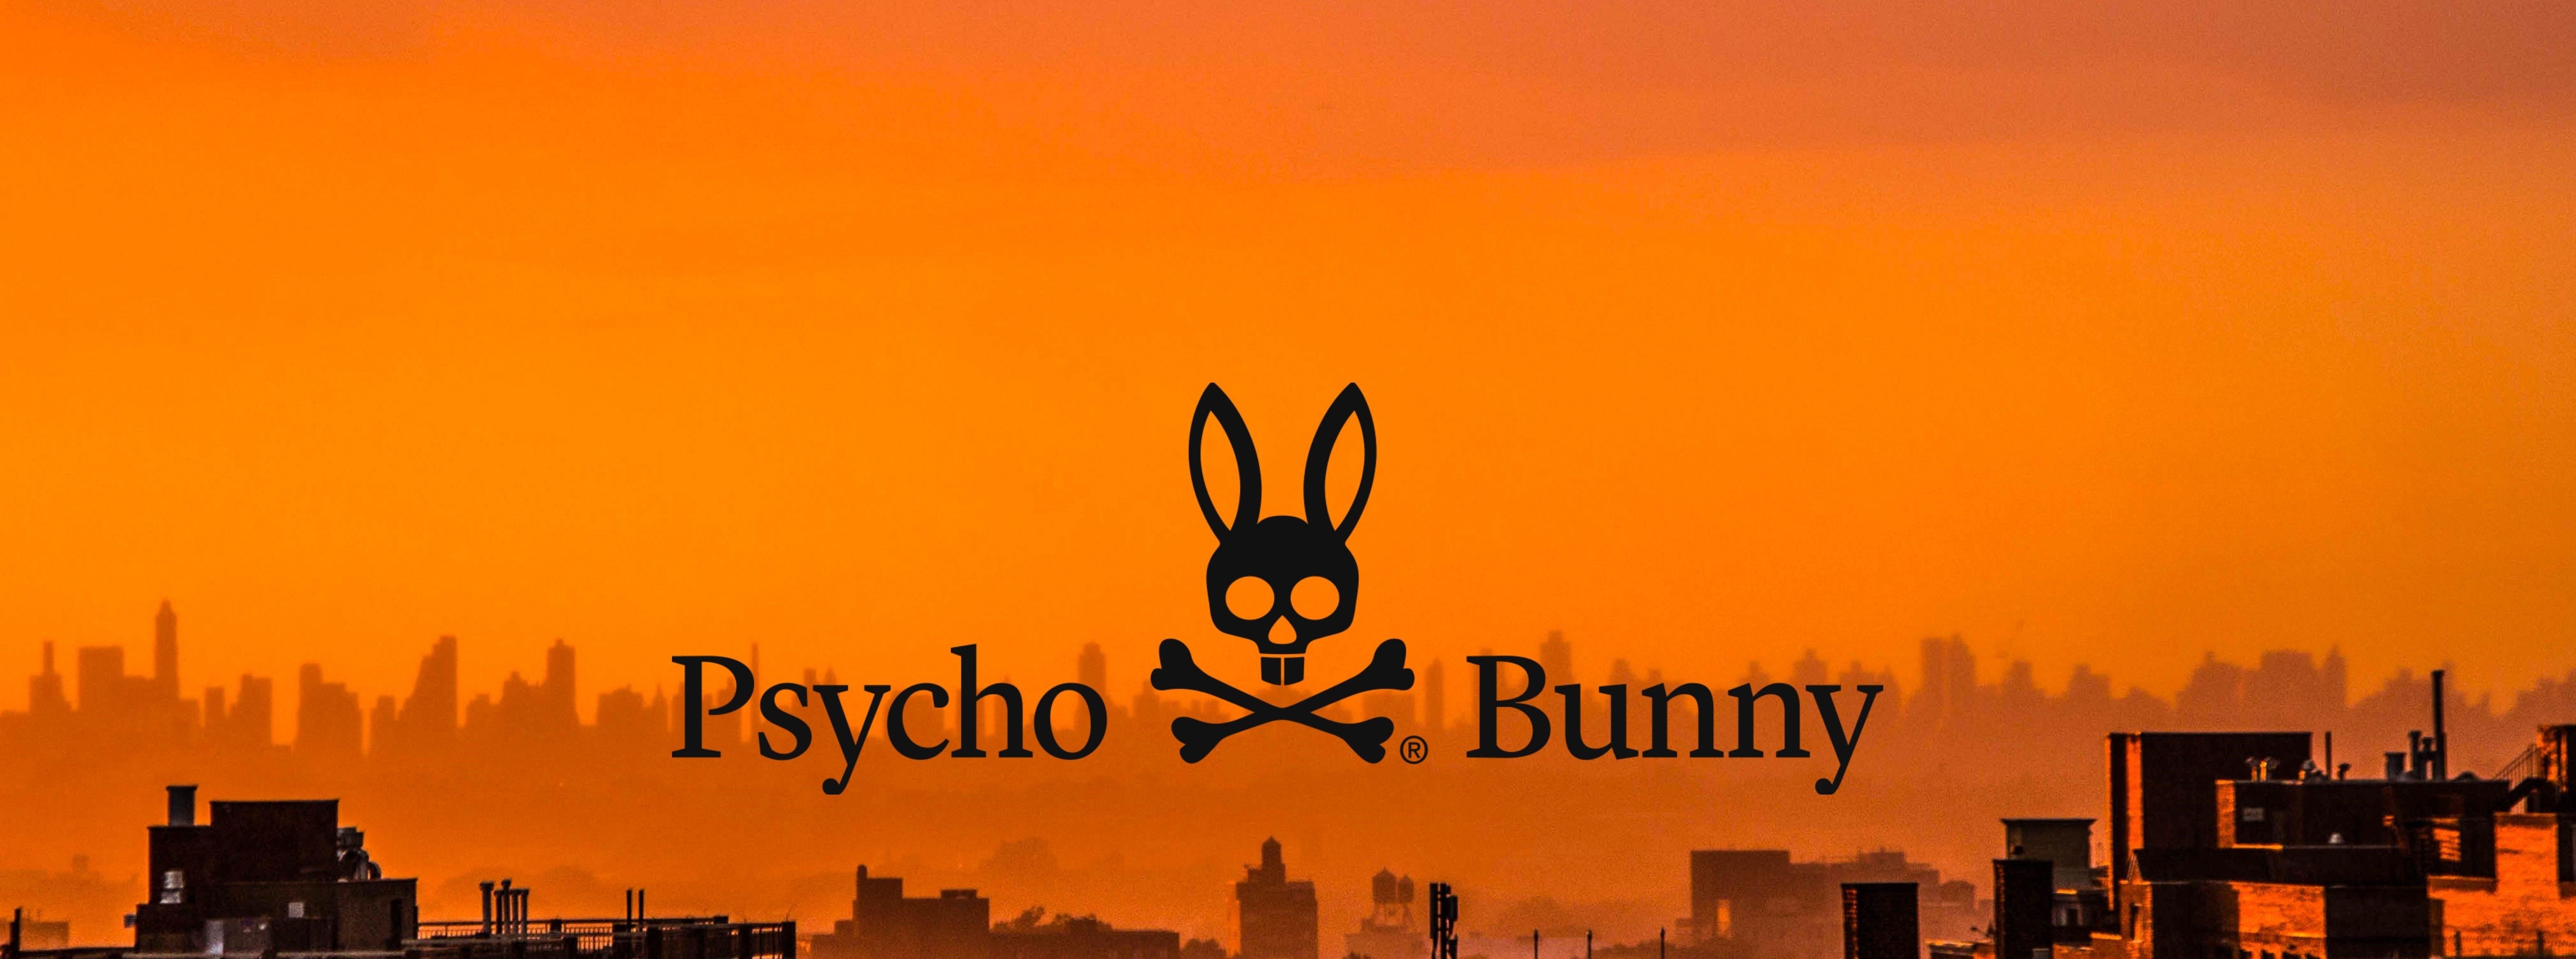 Psycho Bunny Slider Blurred Background